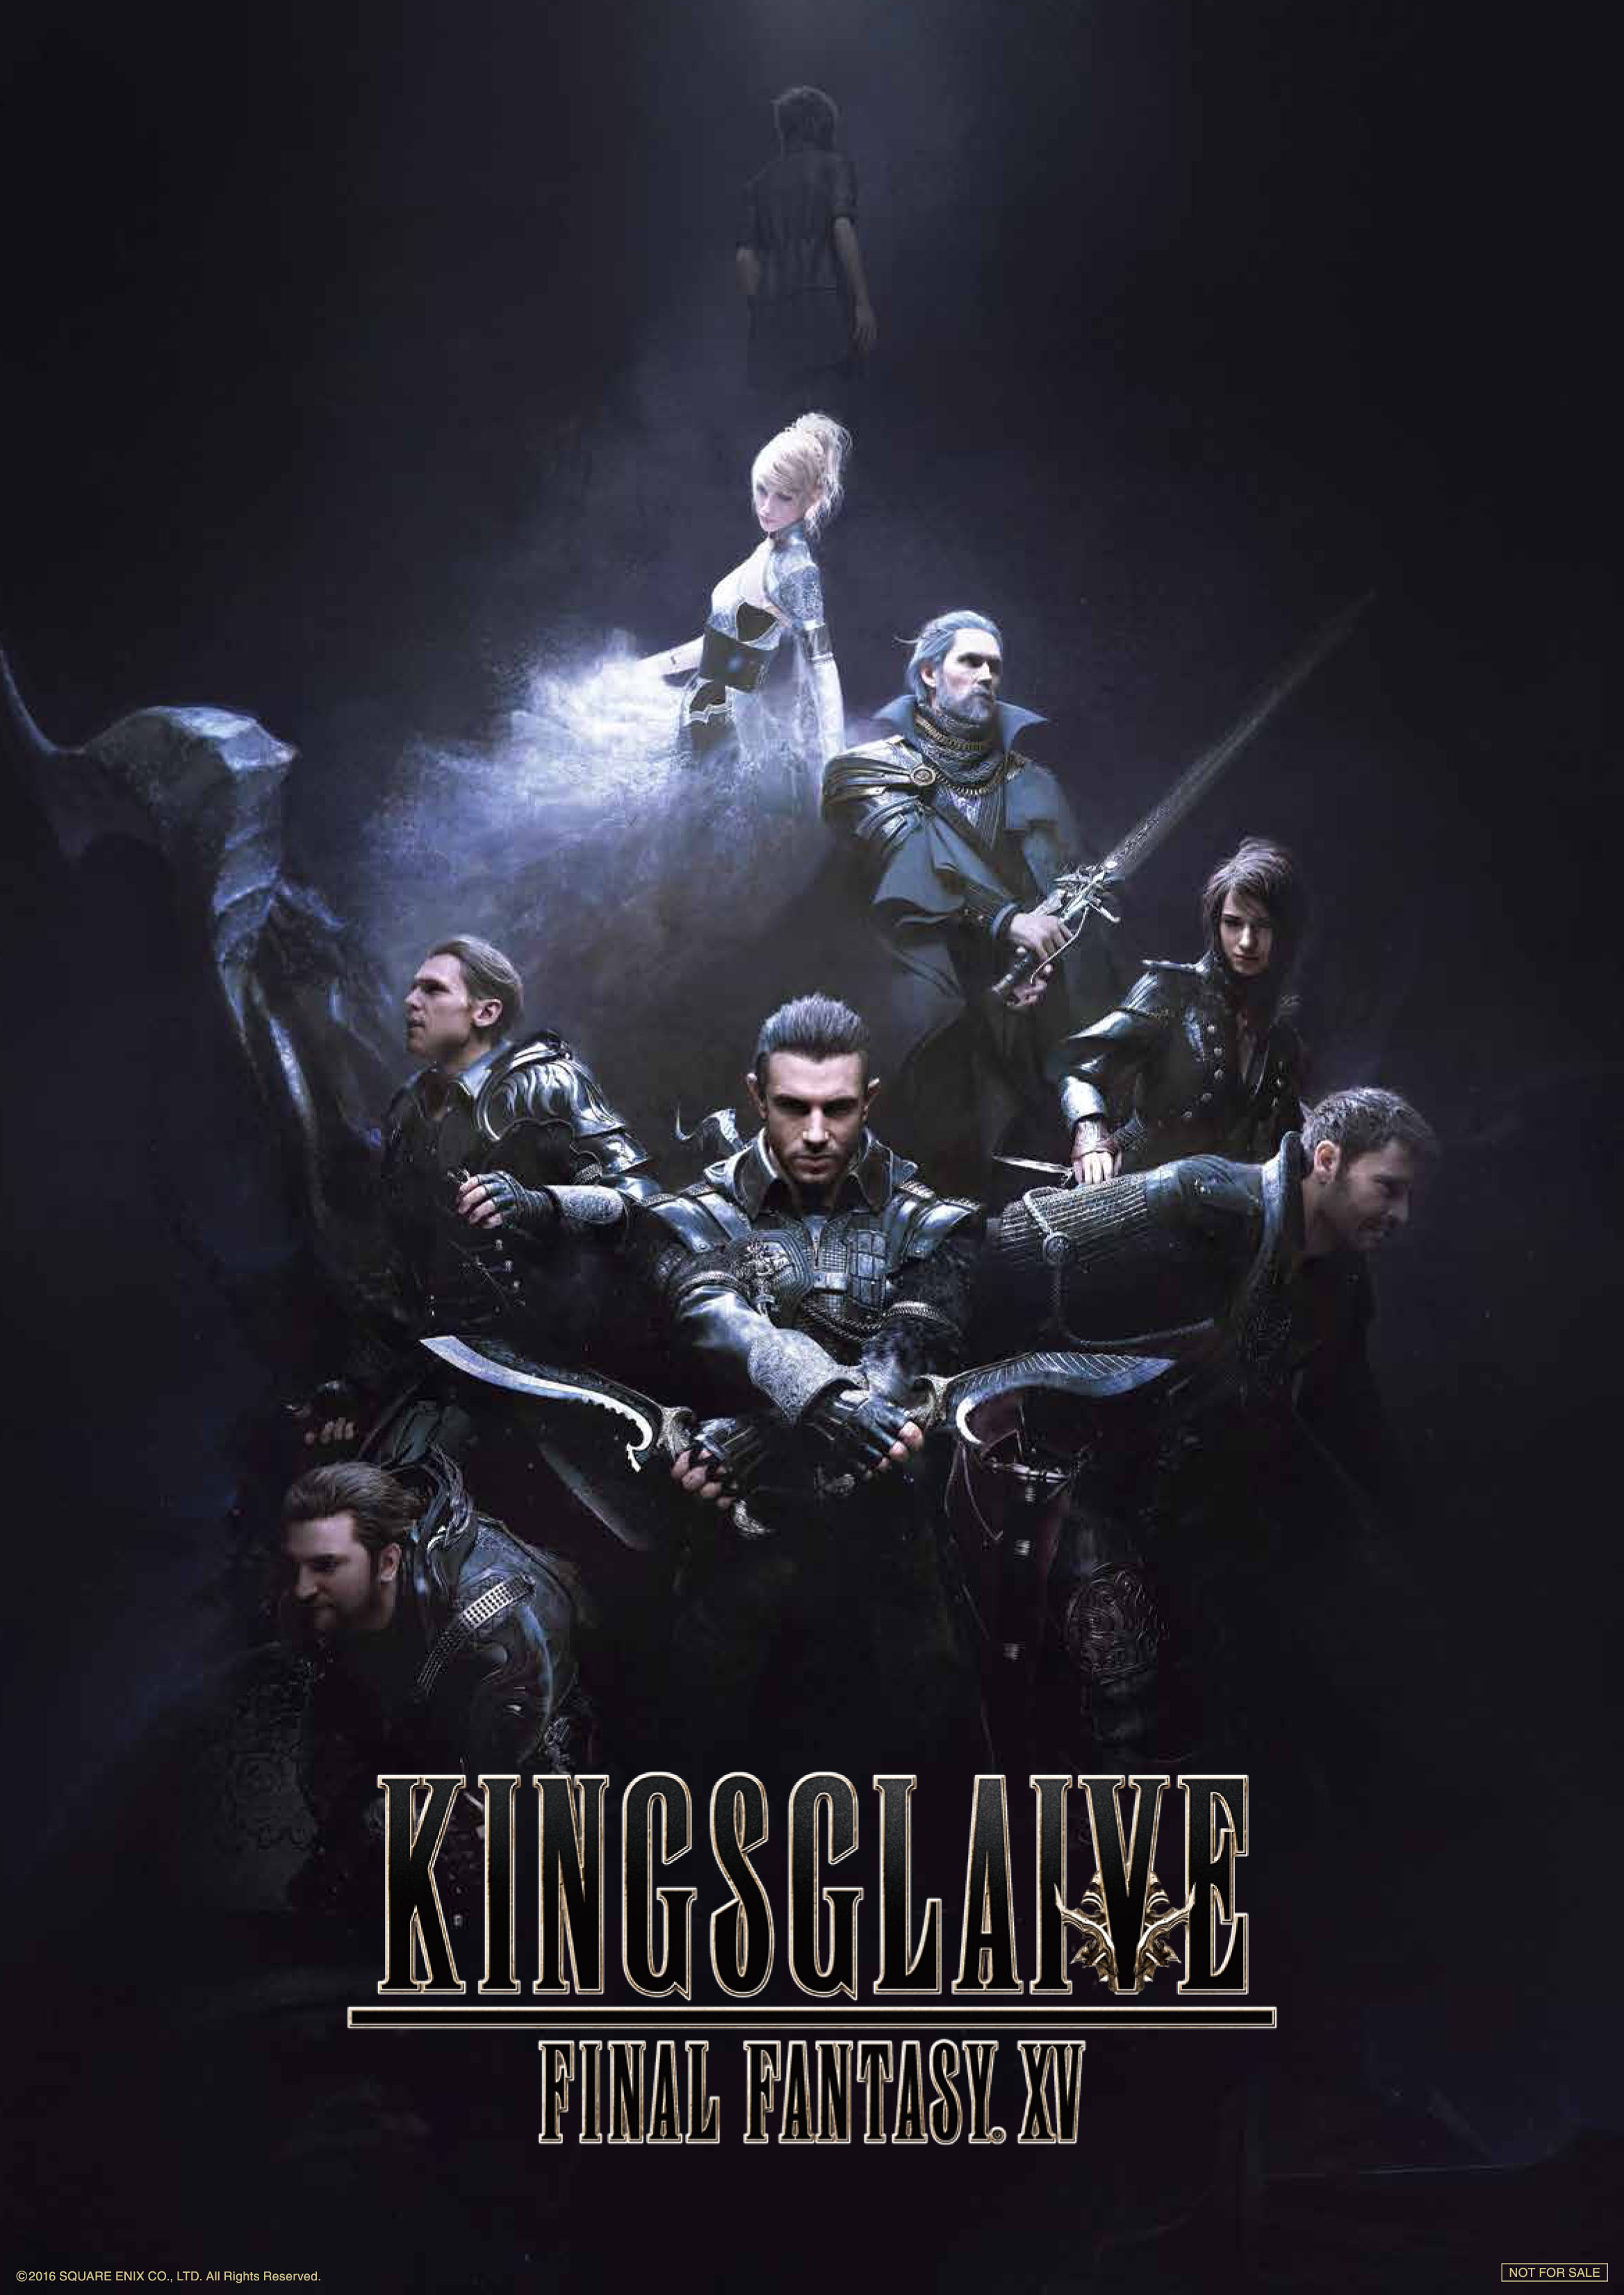 Kingsglaive Final Fantasy Xv 7月9日劇場公開および第1弾前売券のご案内 株式会社アニプレックスのプレスリリース